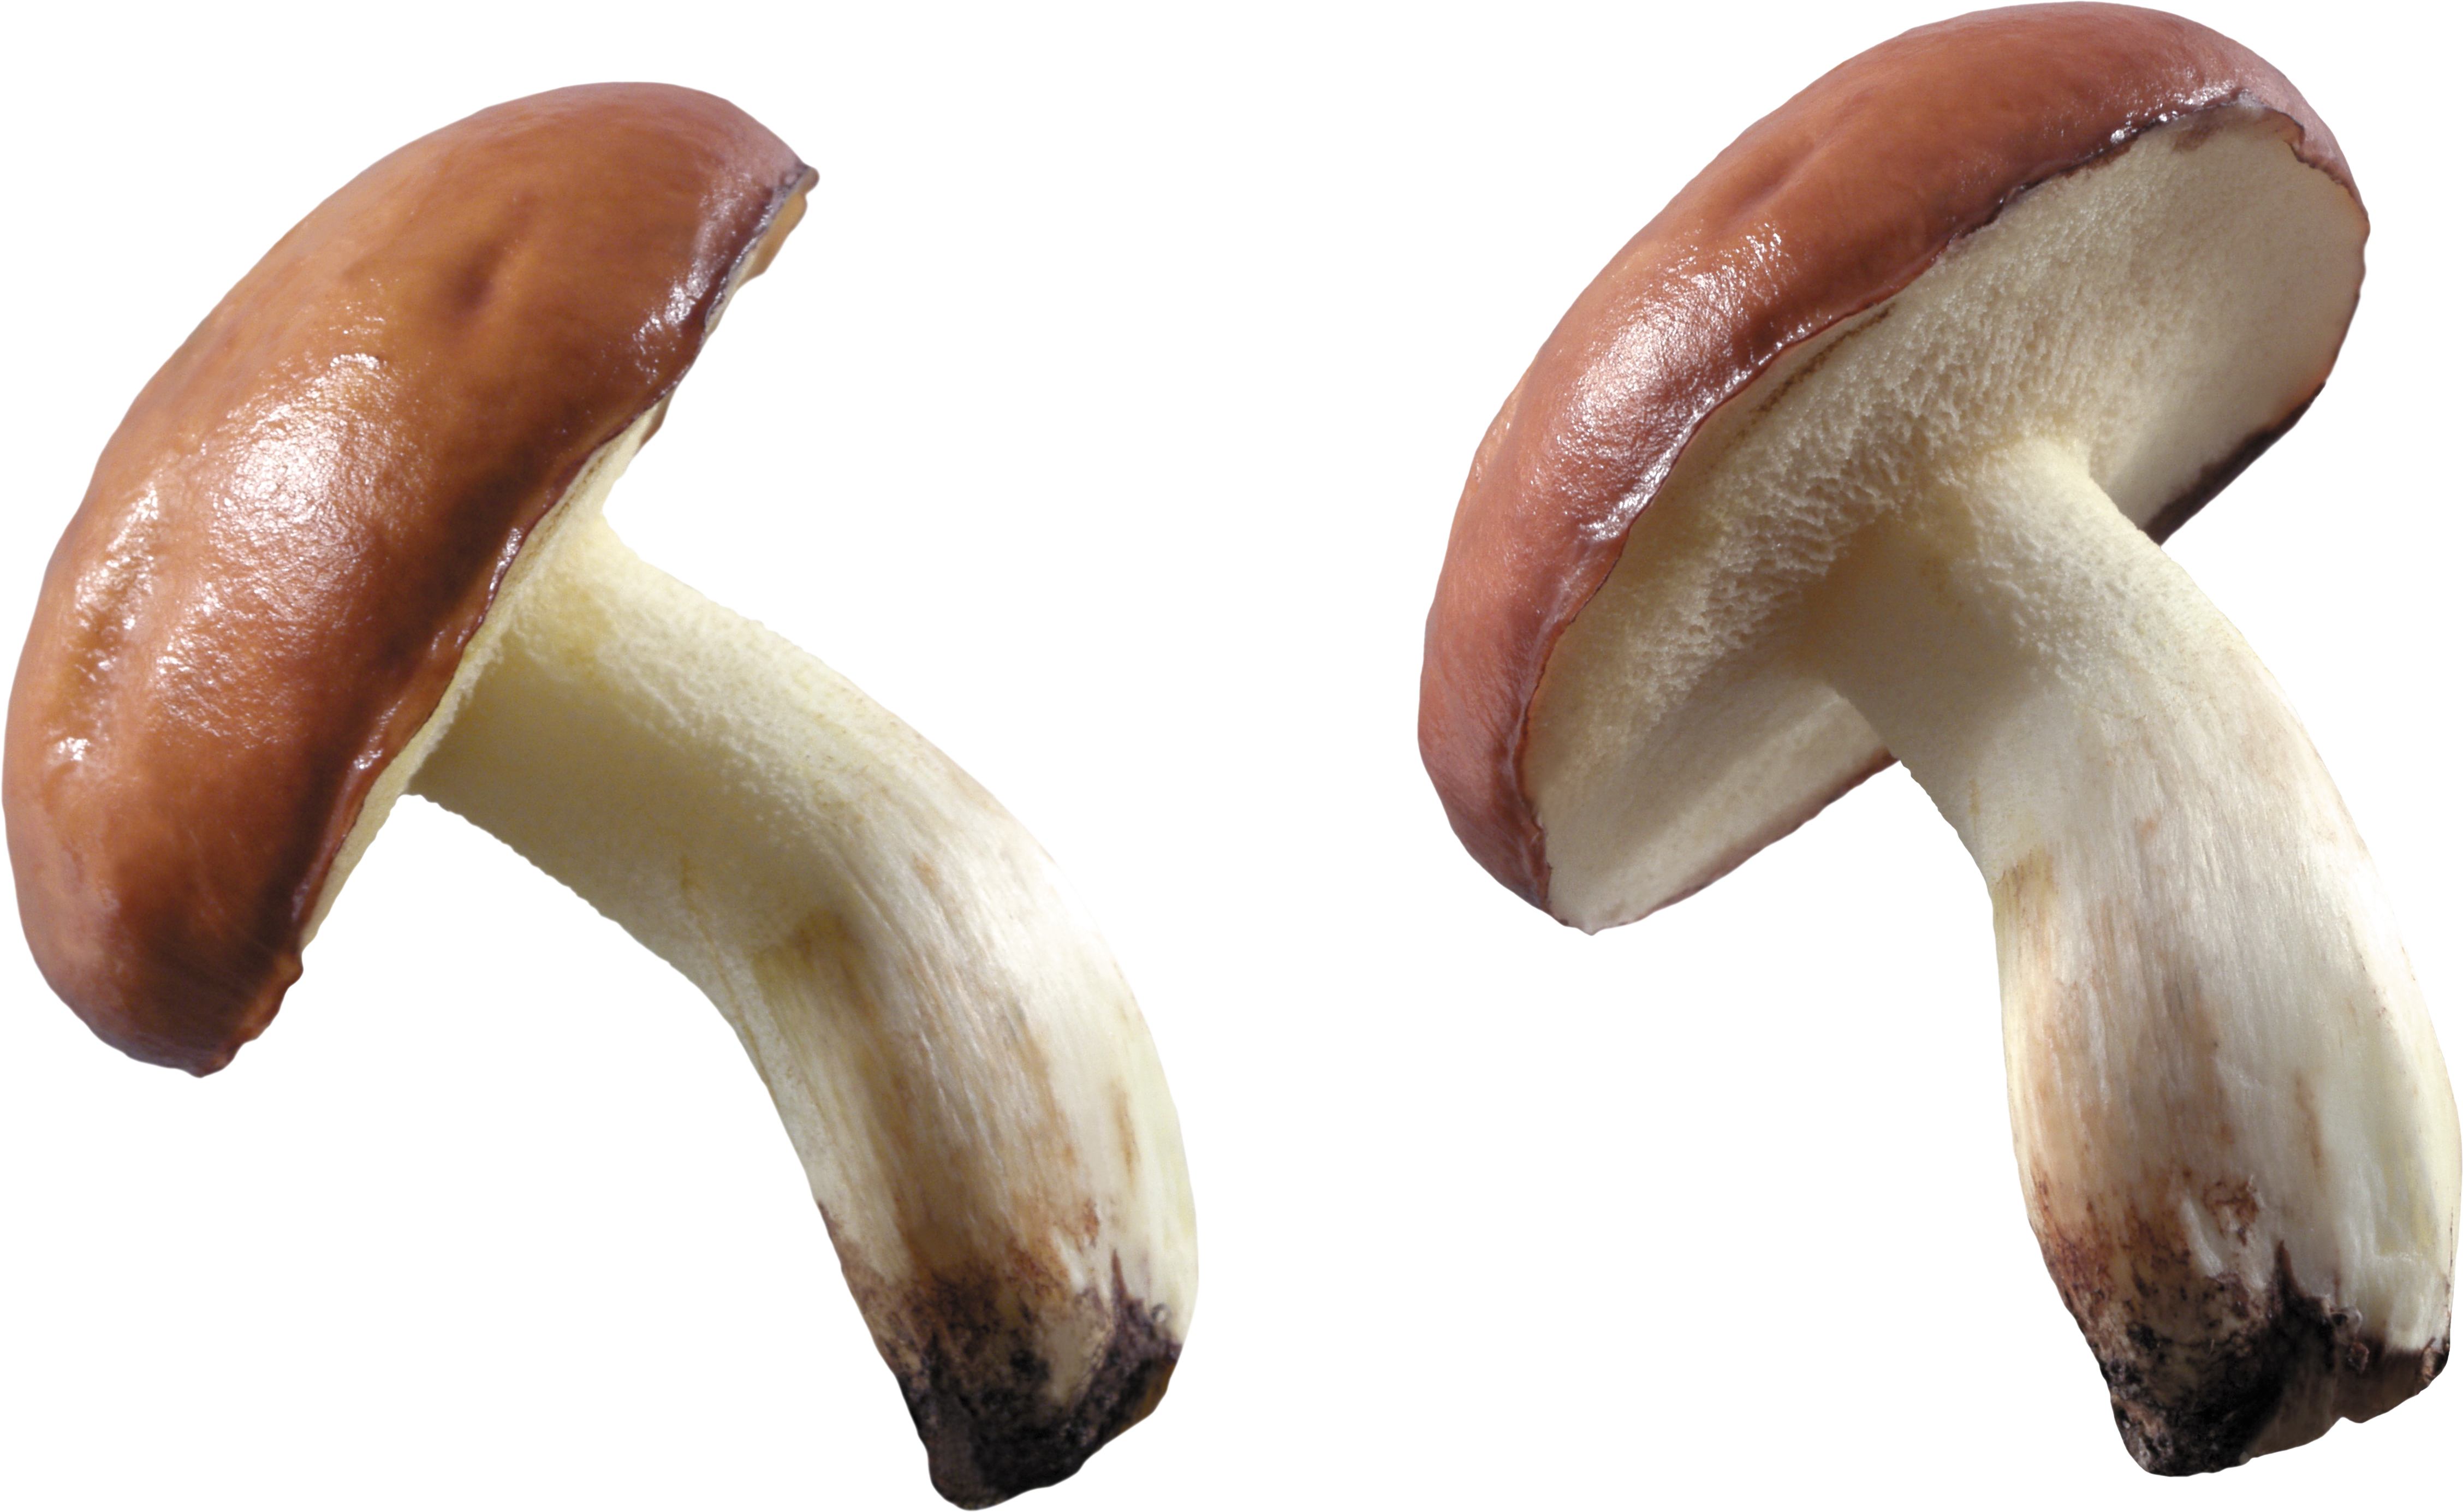 Mushroom PNG HD - 128859